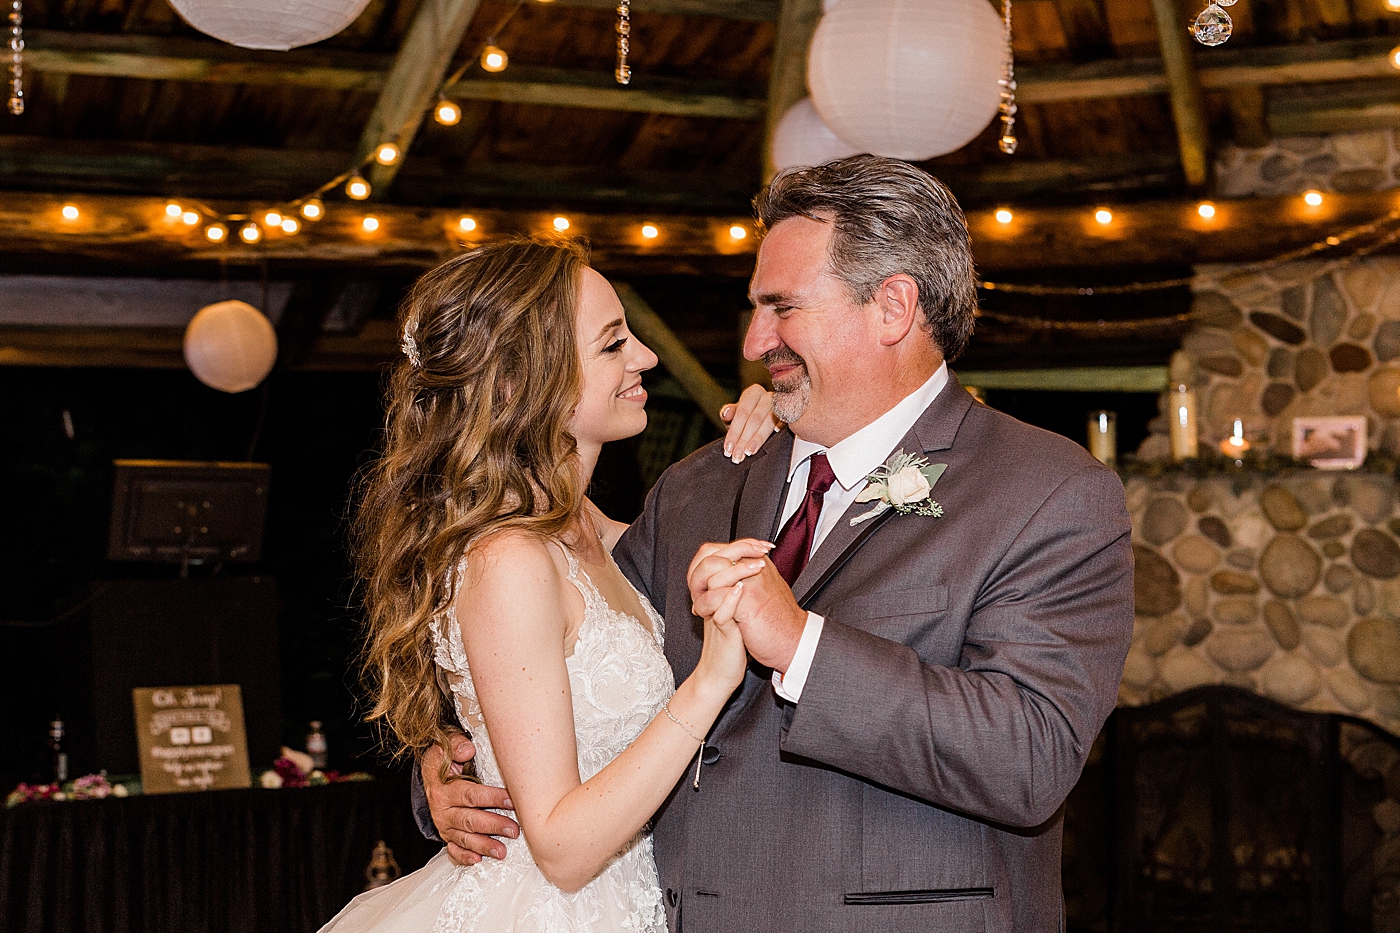 Father-daughter dance at Cedar Springs wedding reception. Photos by Tacoma Wedding Photographer, Megan Montalvo Photography. 